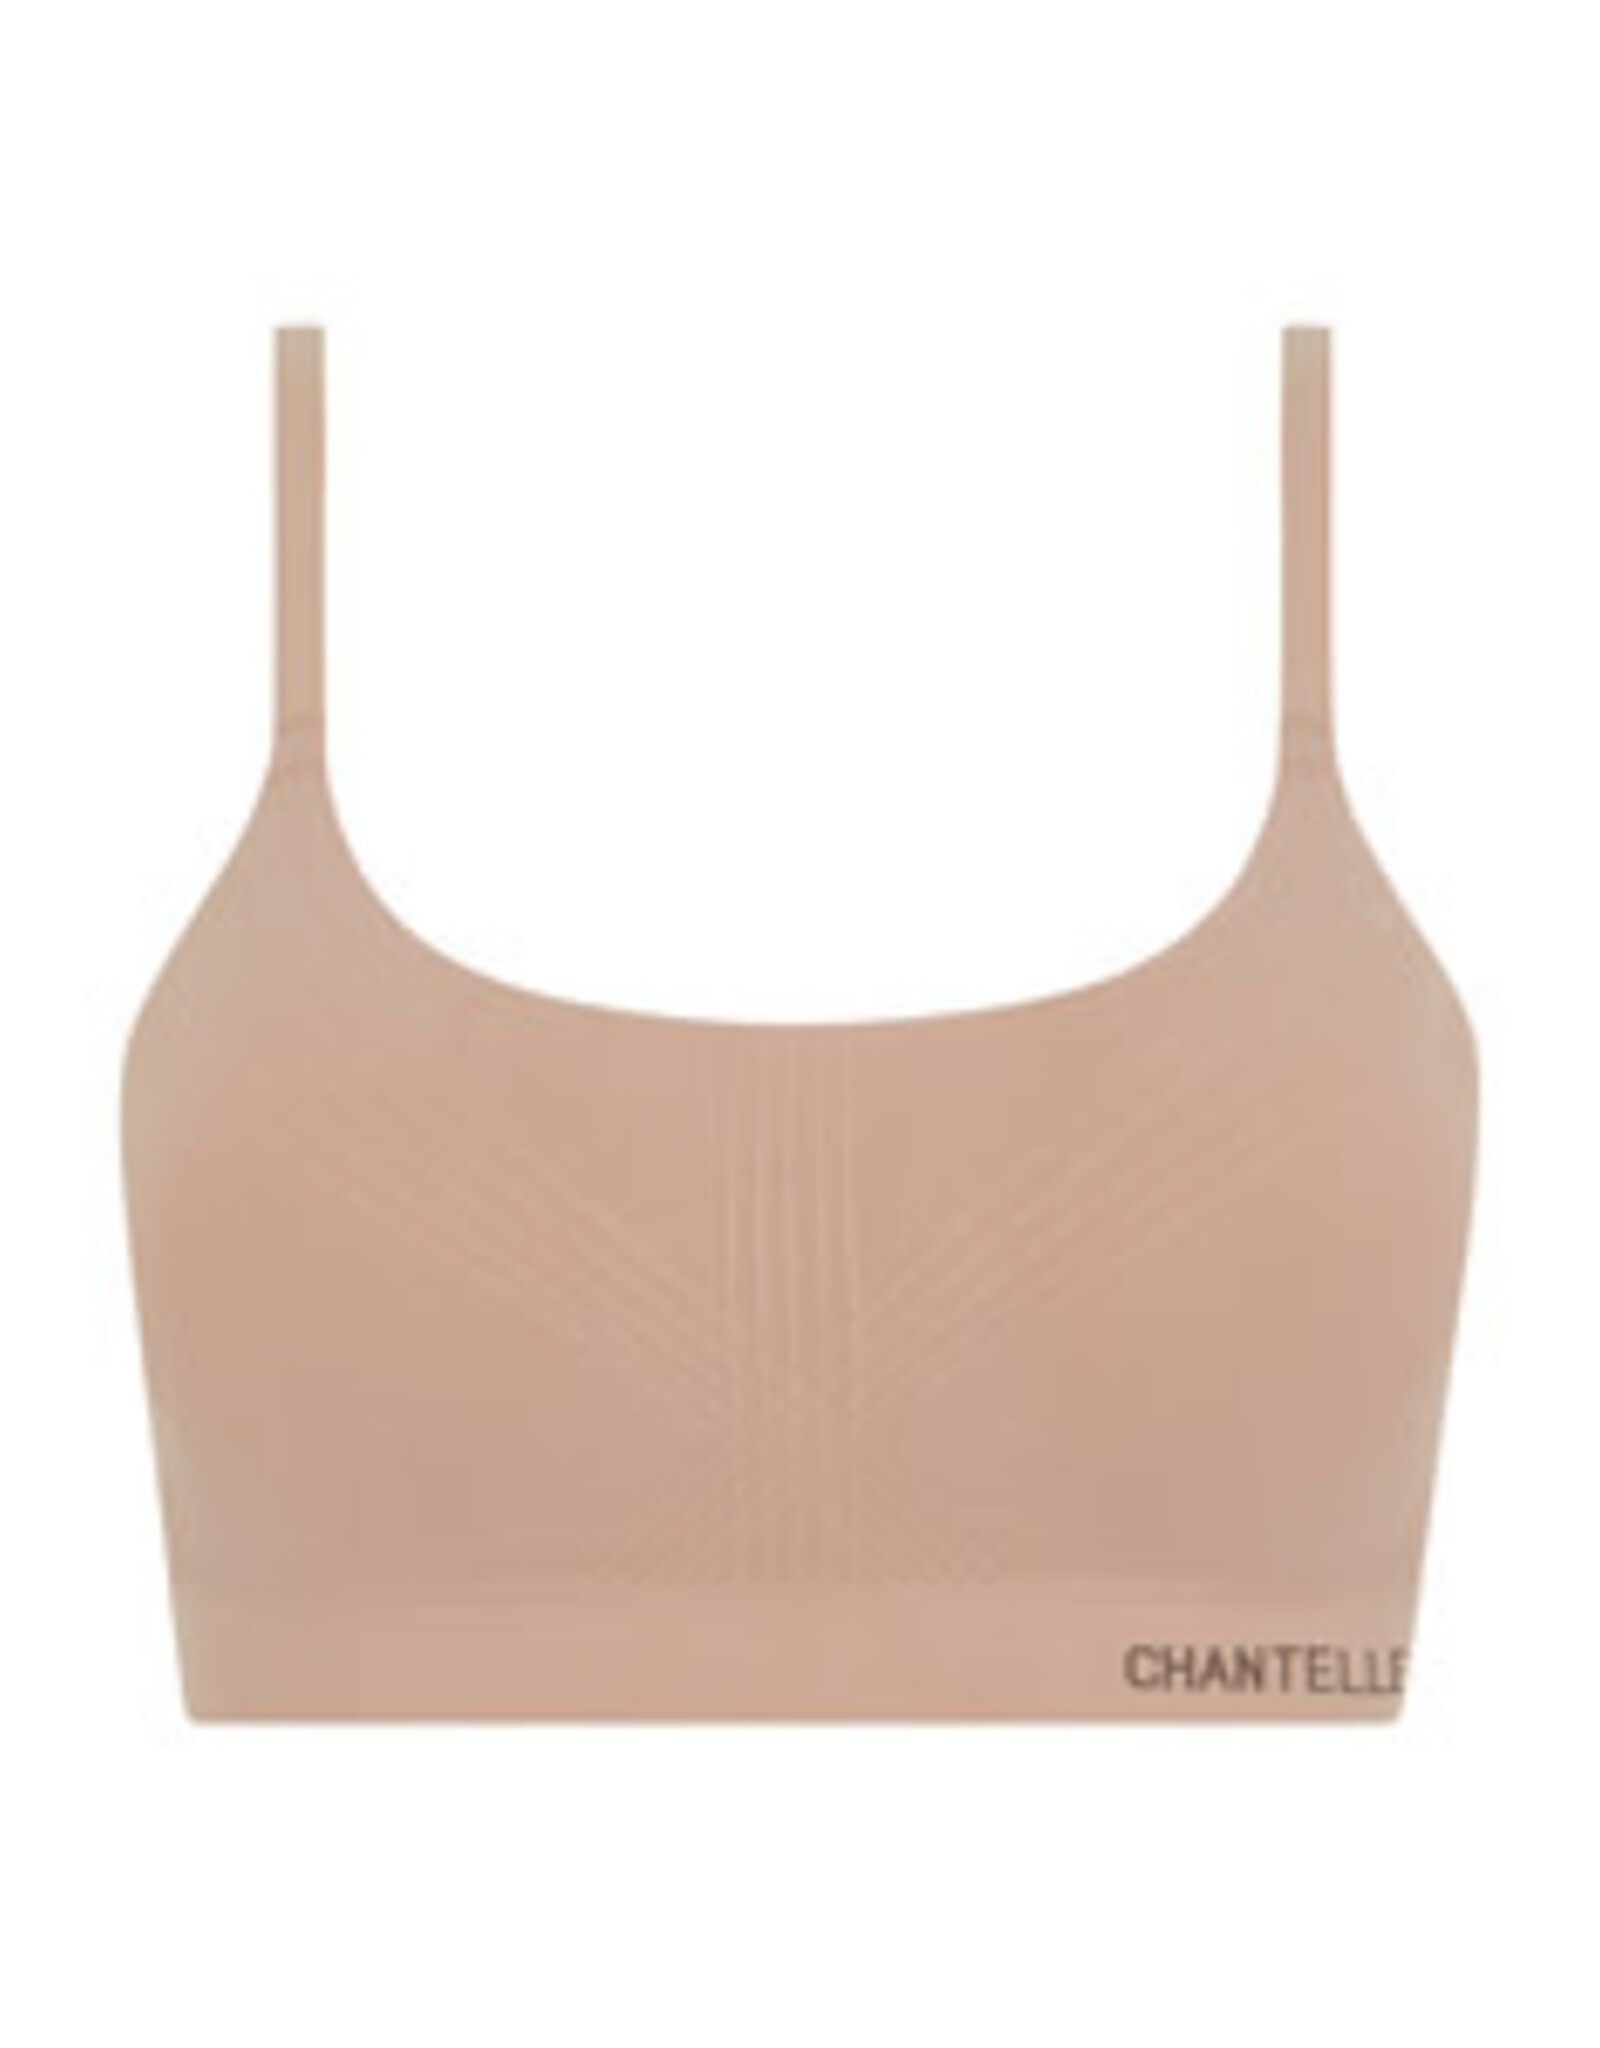 Chantelle 270229 Women's Lightly Padded Underwire Bra Nude Size 30G